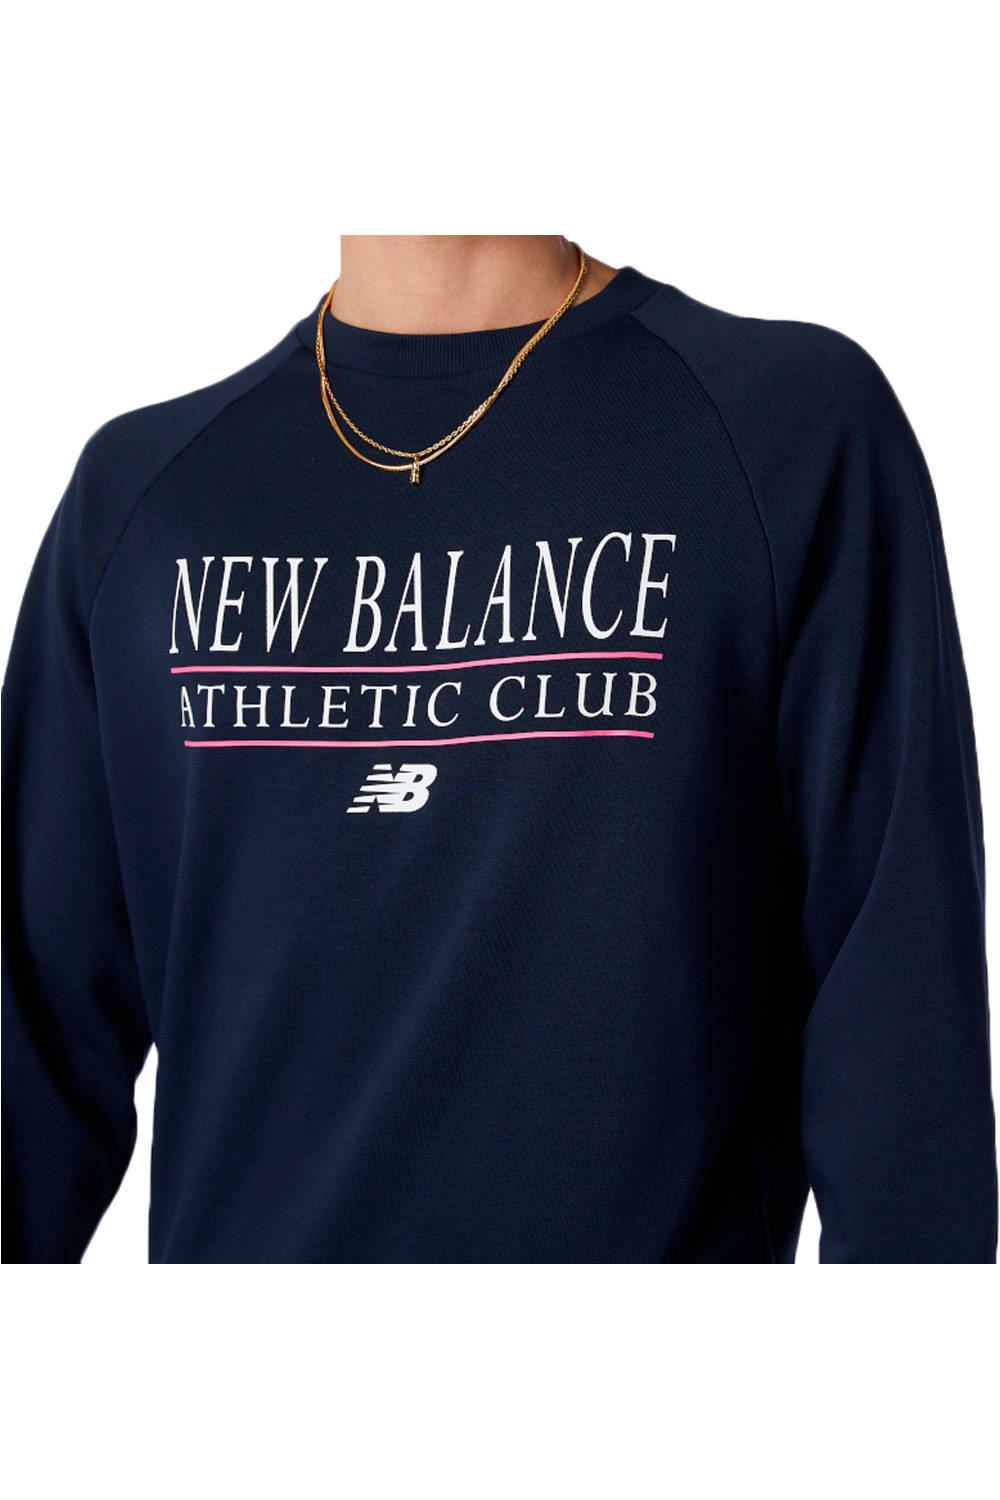 New Balance sudadera hombre NB Essentials Athletic Club Crew vista detalle